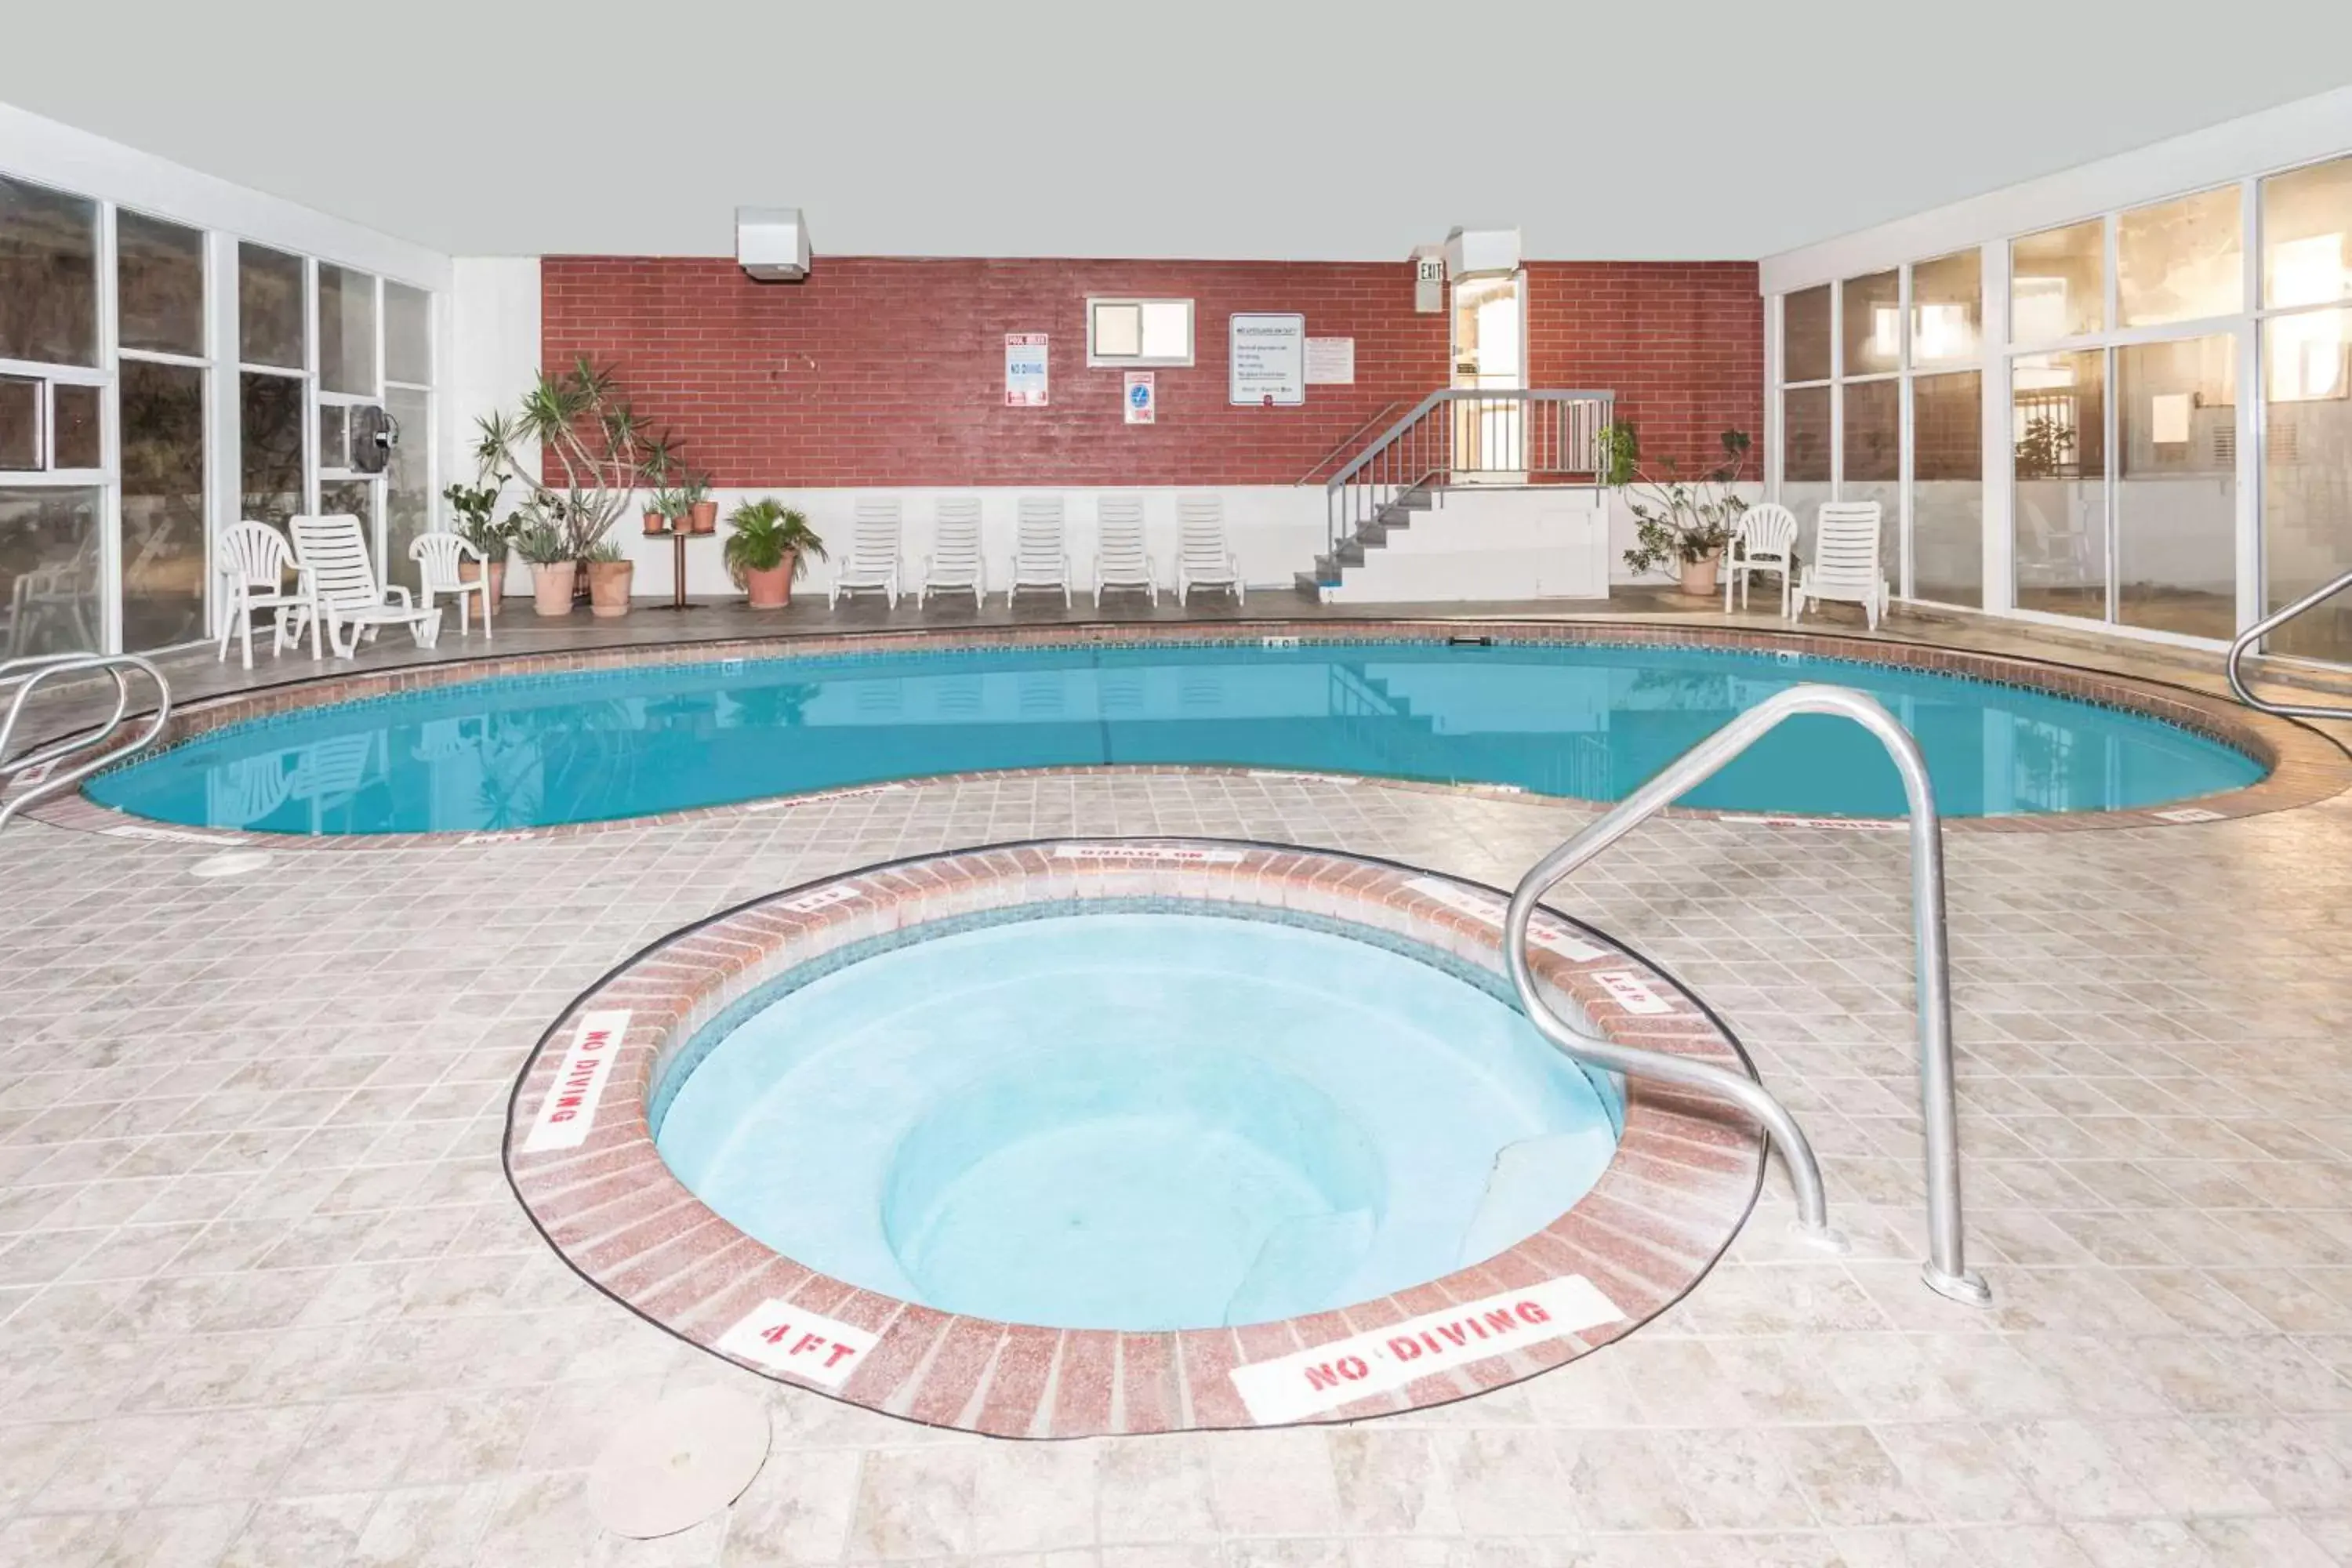 On site, Swimming Pool in Days Inn by Wyndham Evanston WY